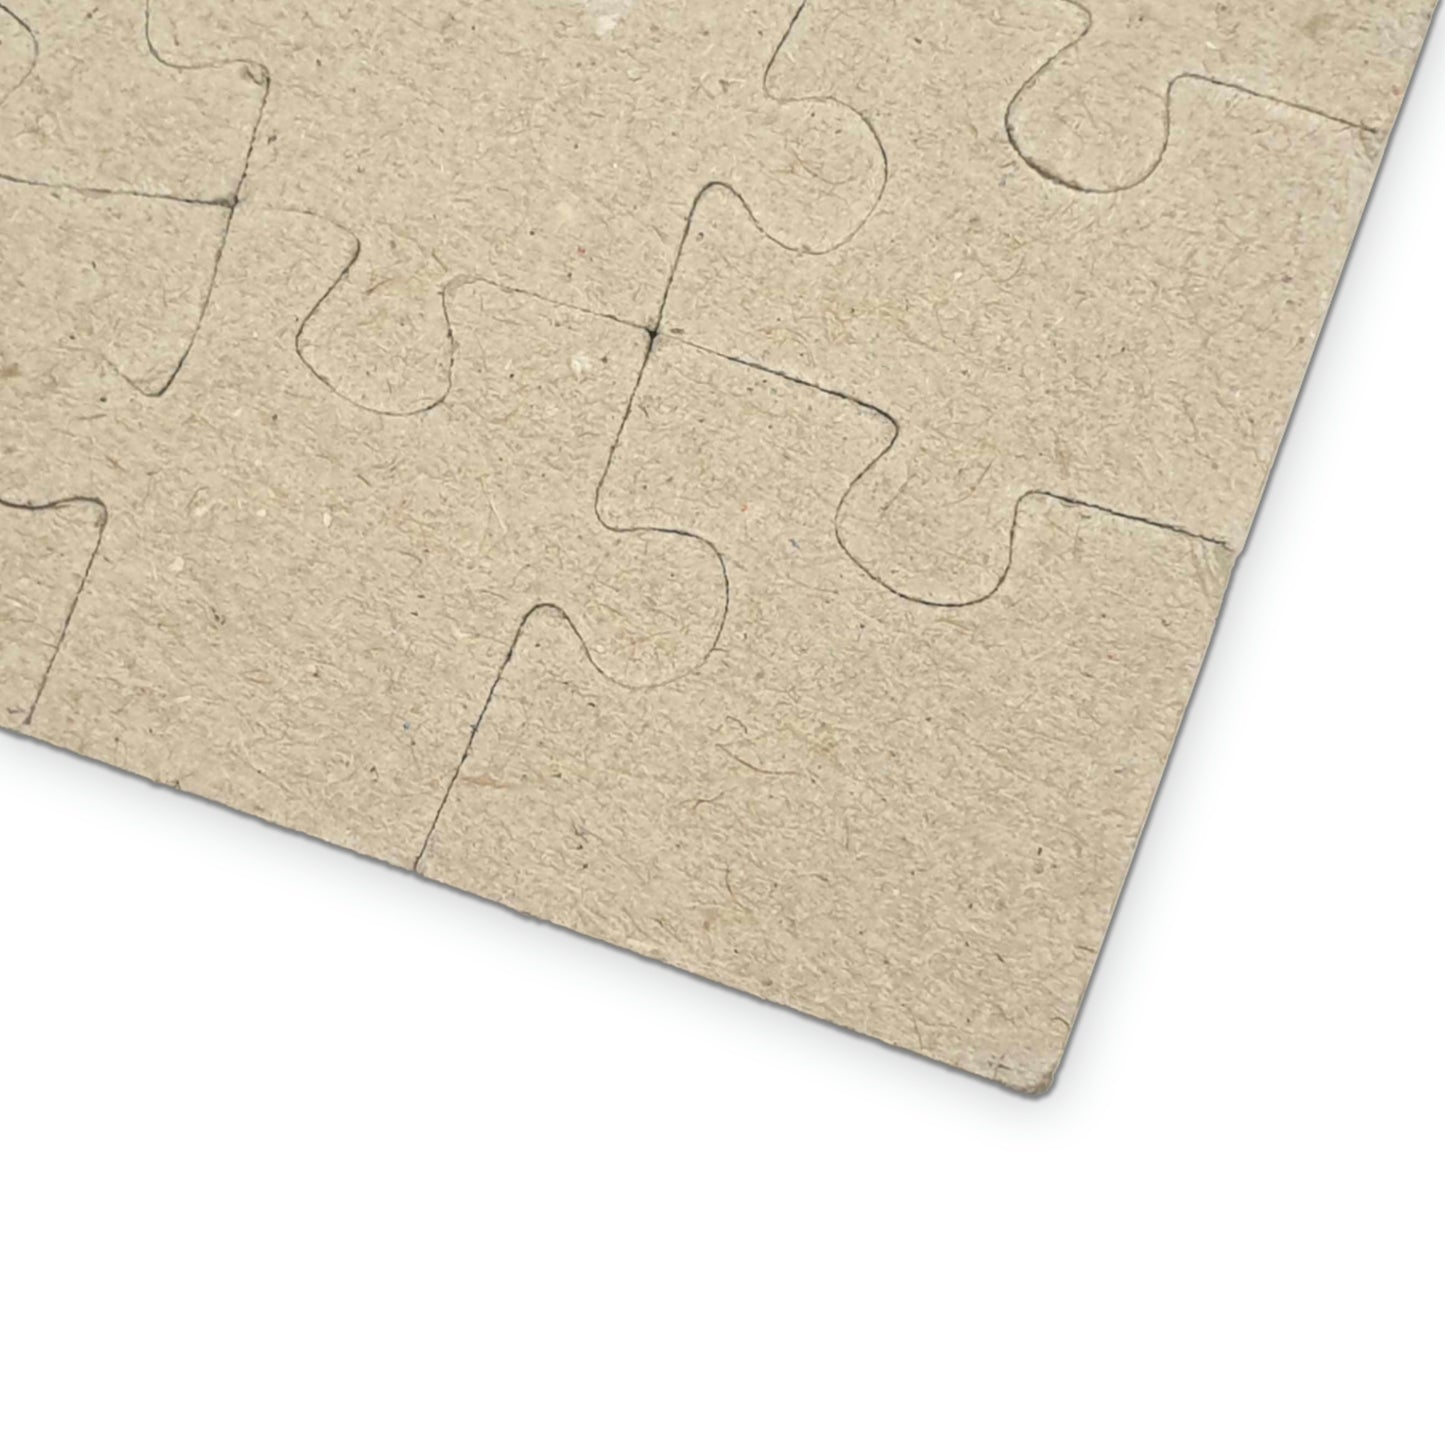 Whitechapel - 1000 Piece Jigsaw Puzzle